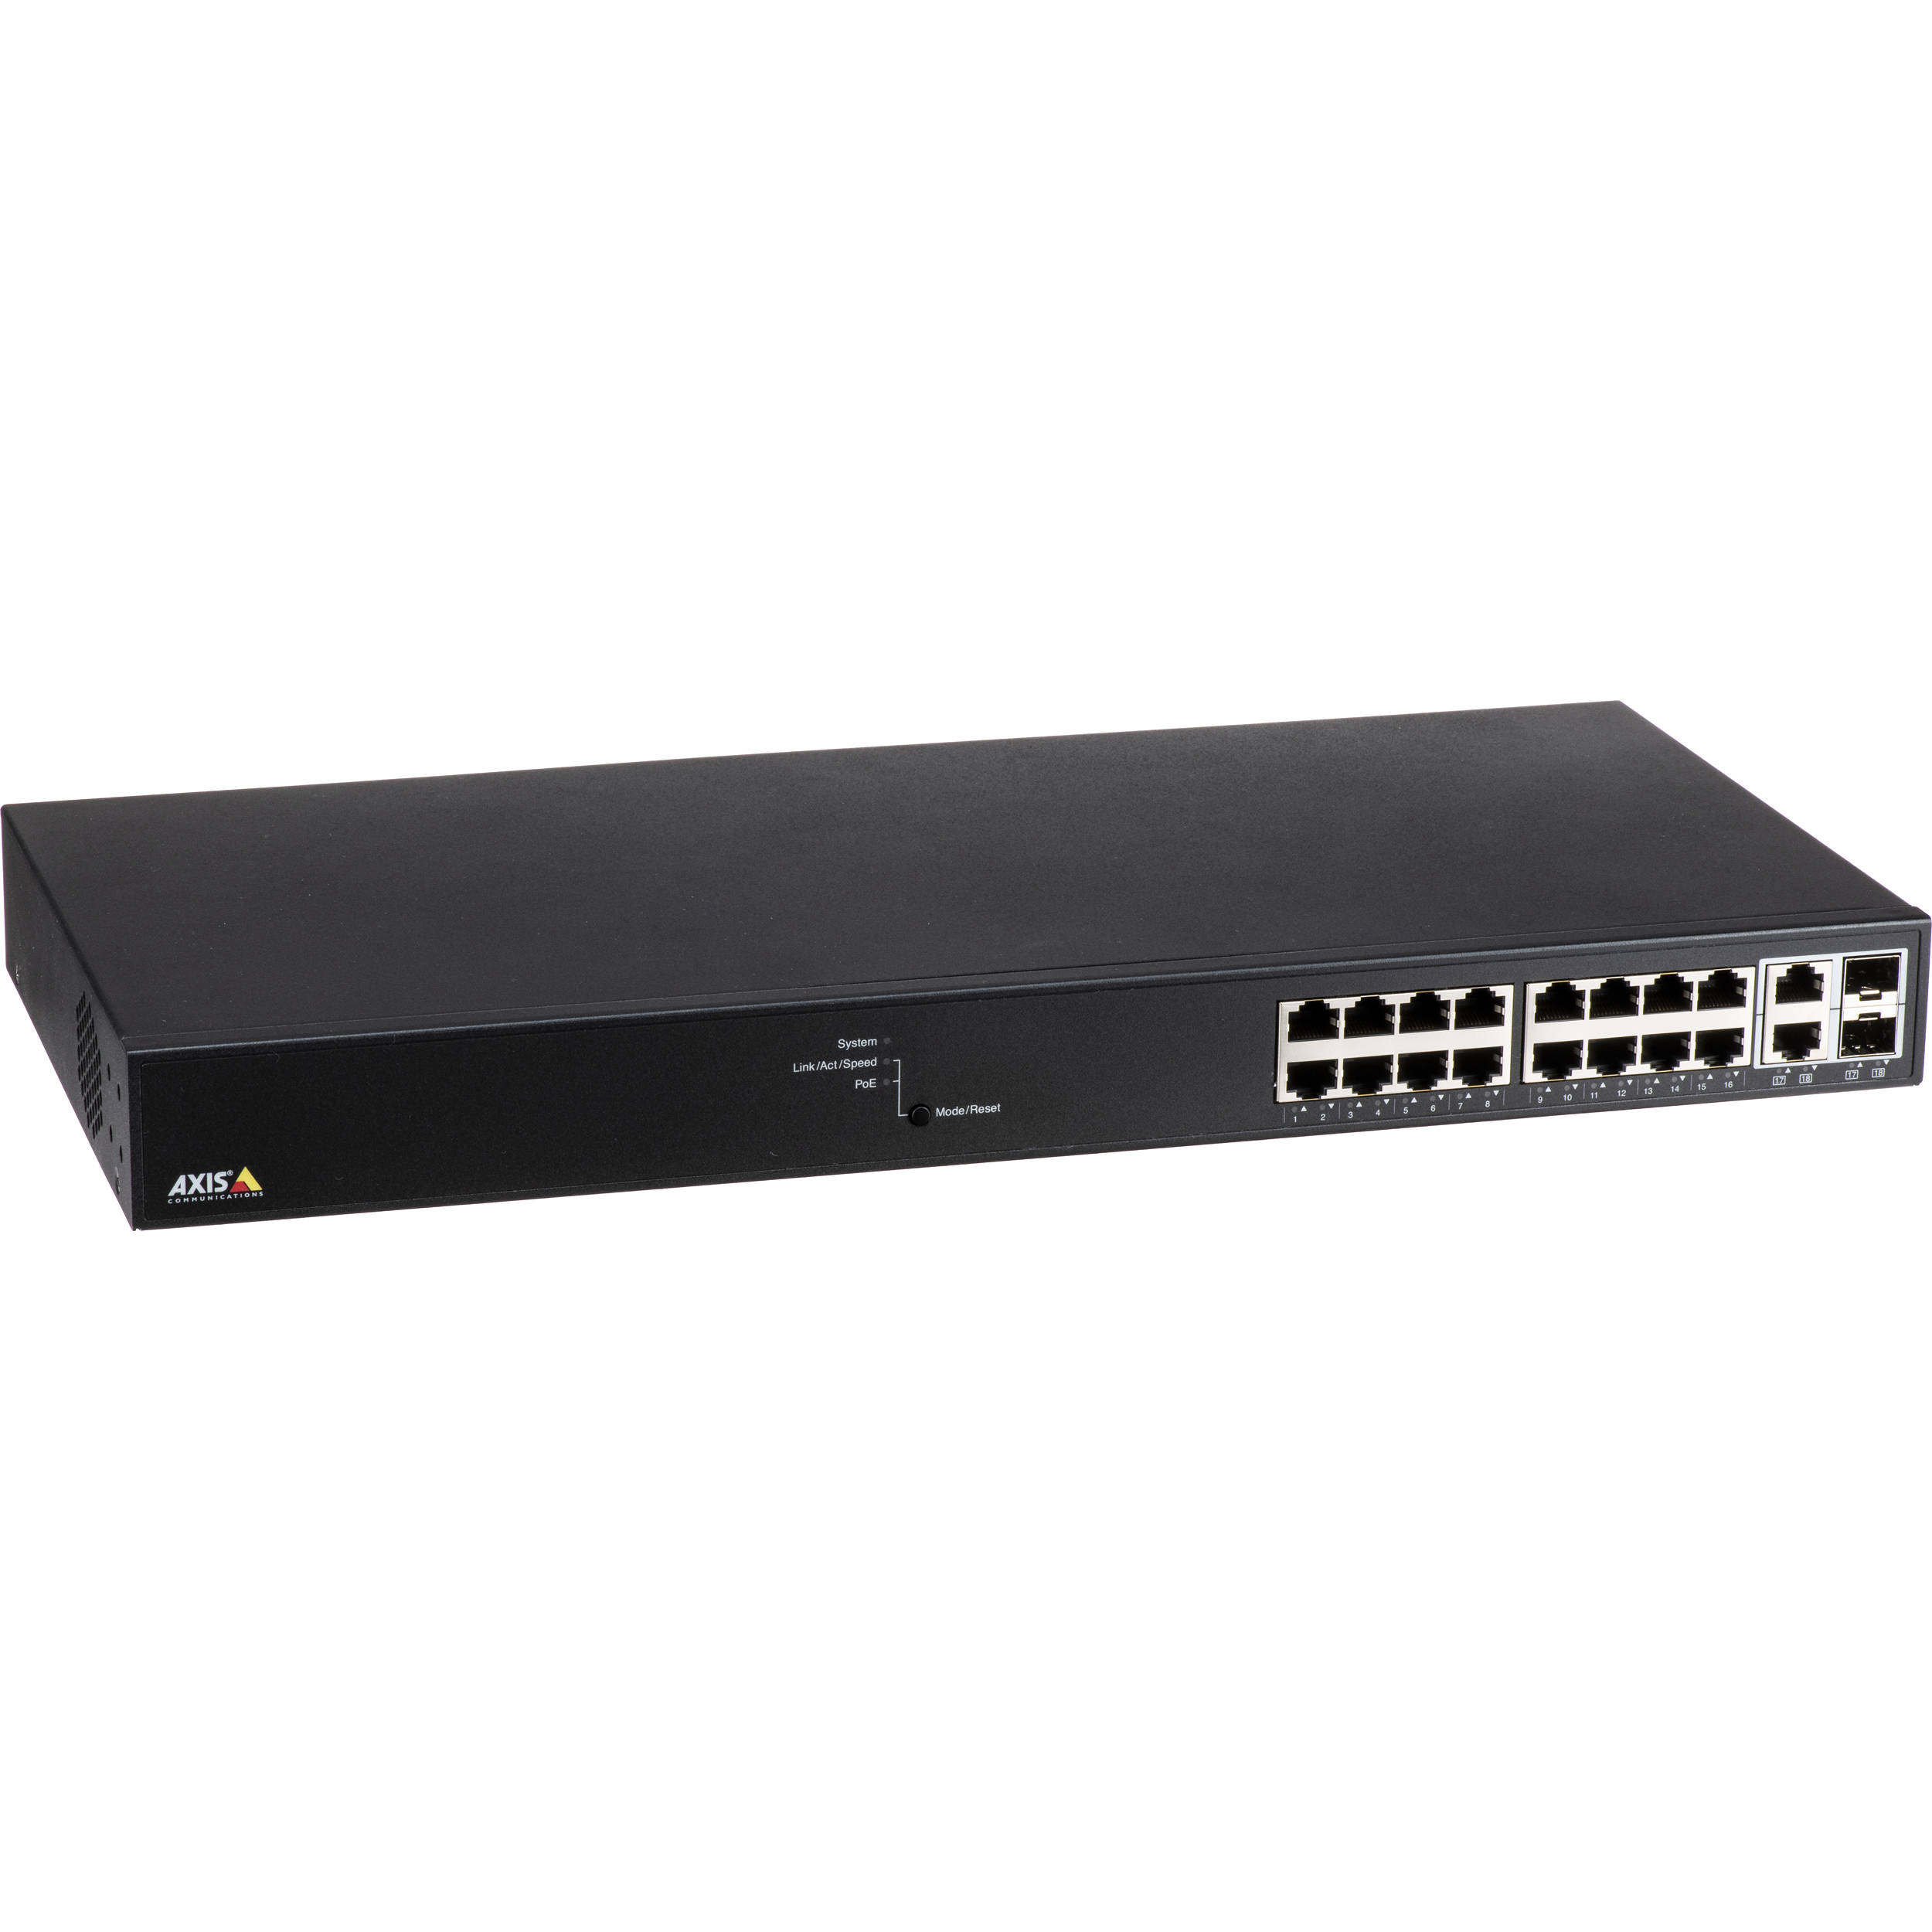 T8516 POE NETWORK SWITCH switch-de-16-puertos UPC 7331021055308 - AXIS